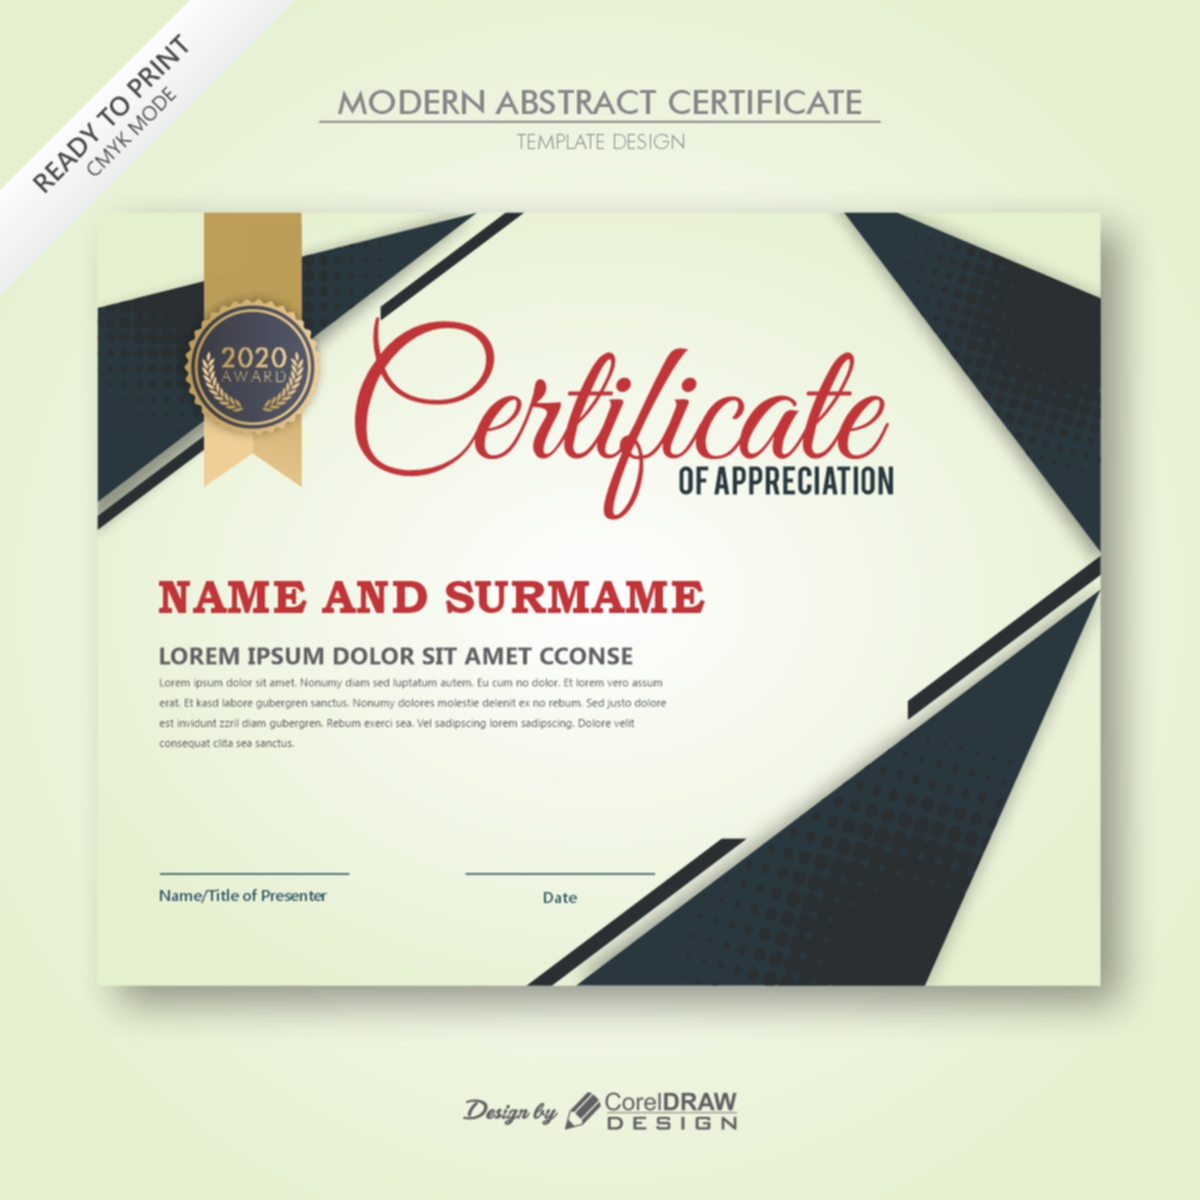 download-modern-abstract-certificate-template-design-coreldraw-design